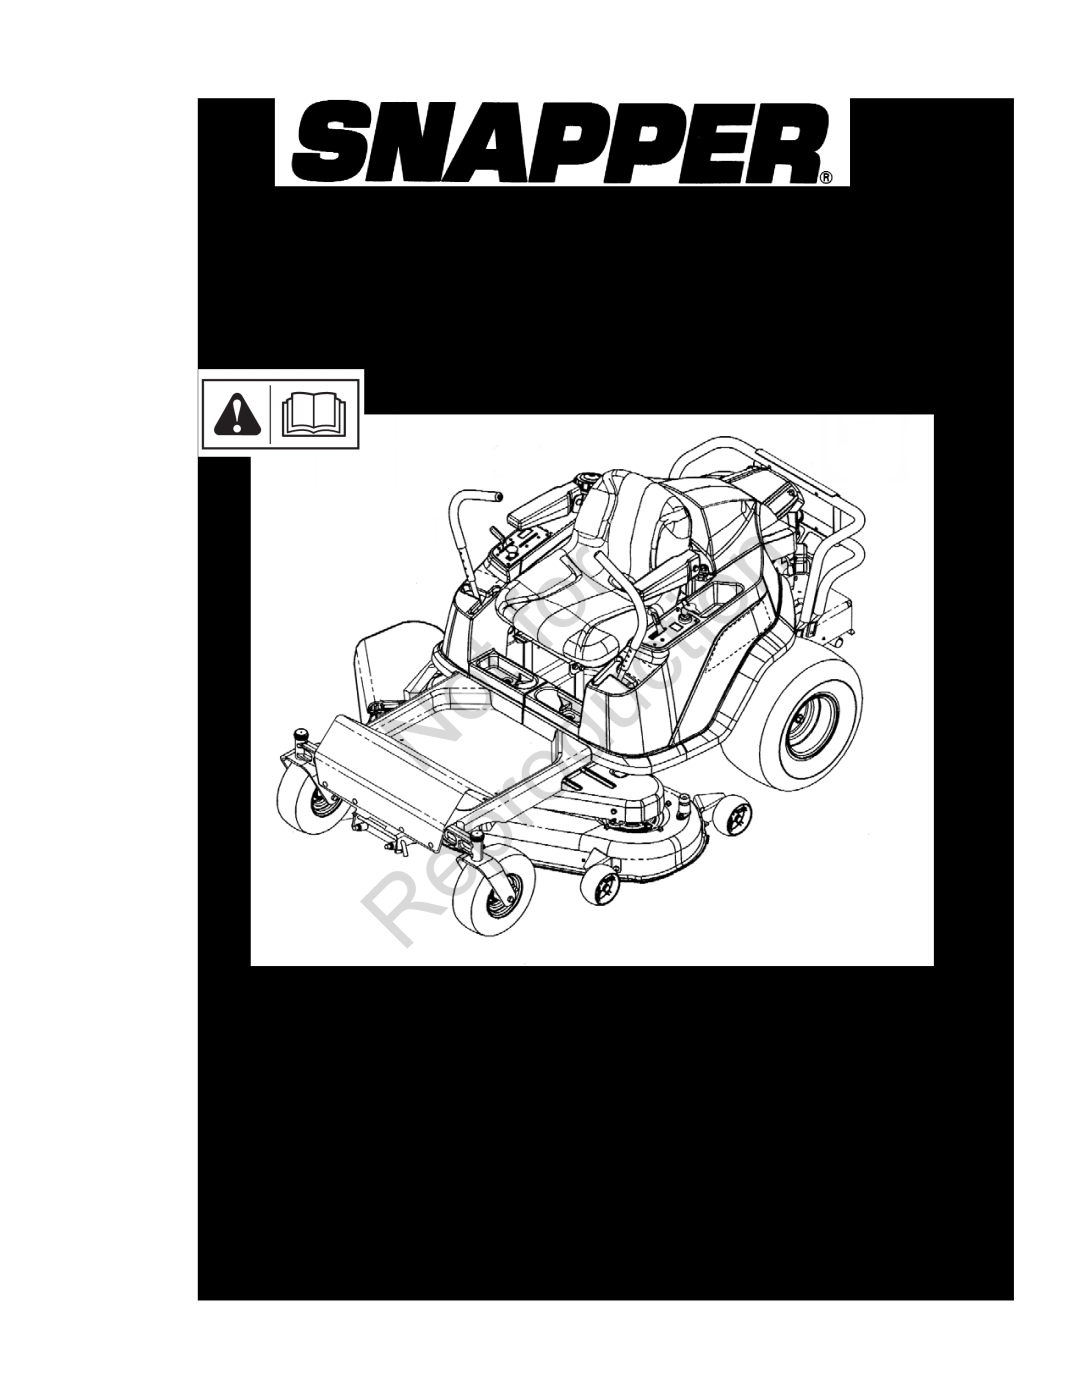 Snapper manual Reproduction, 285Z Series Zero Turn Rider, Operator’s Manual, Mfg. No. Description 